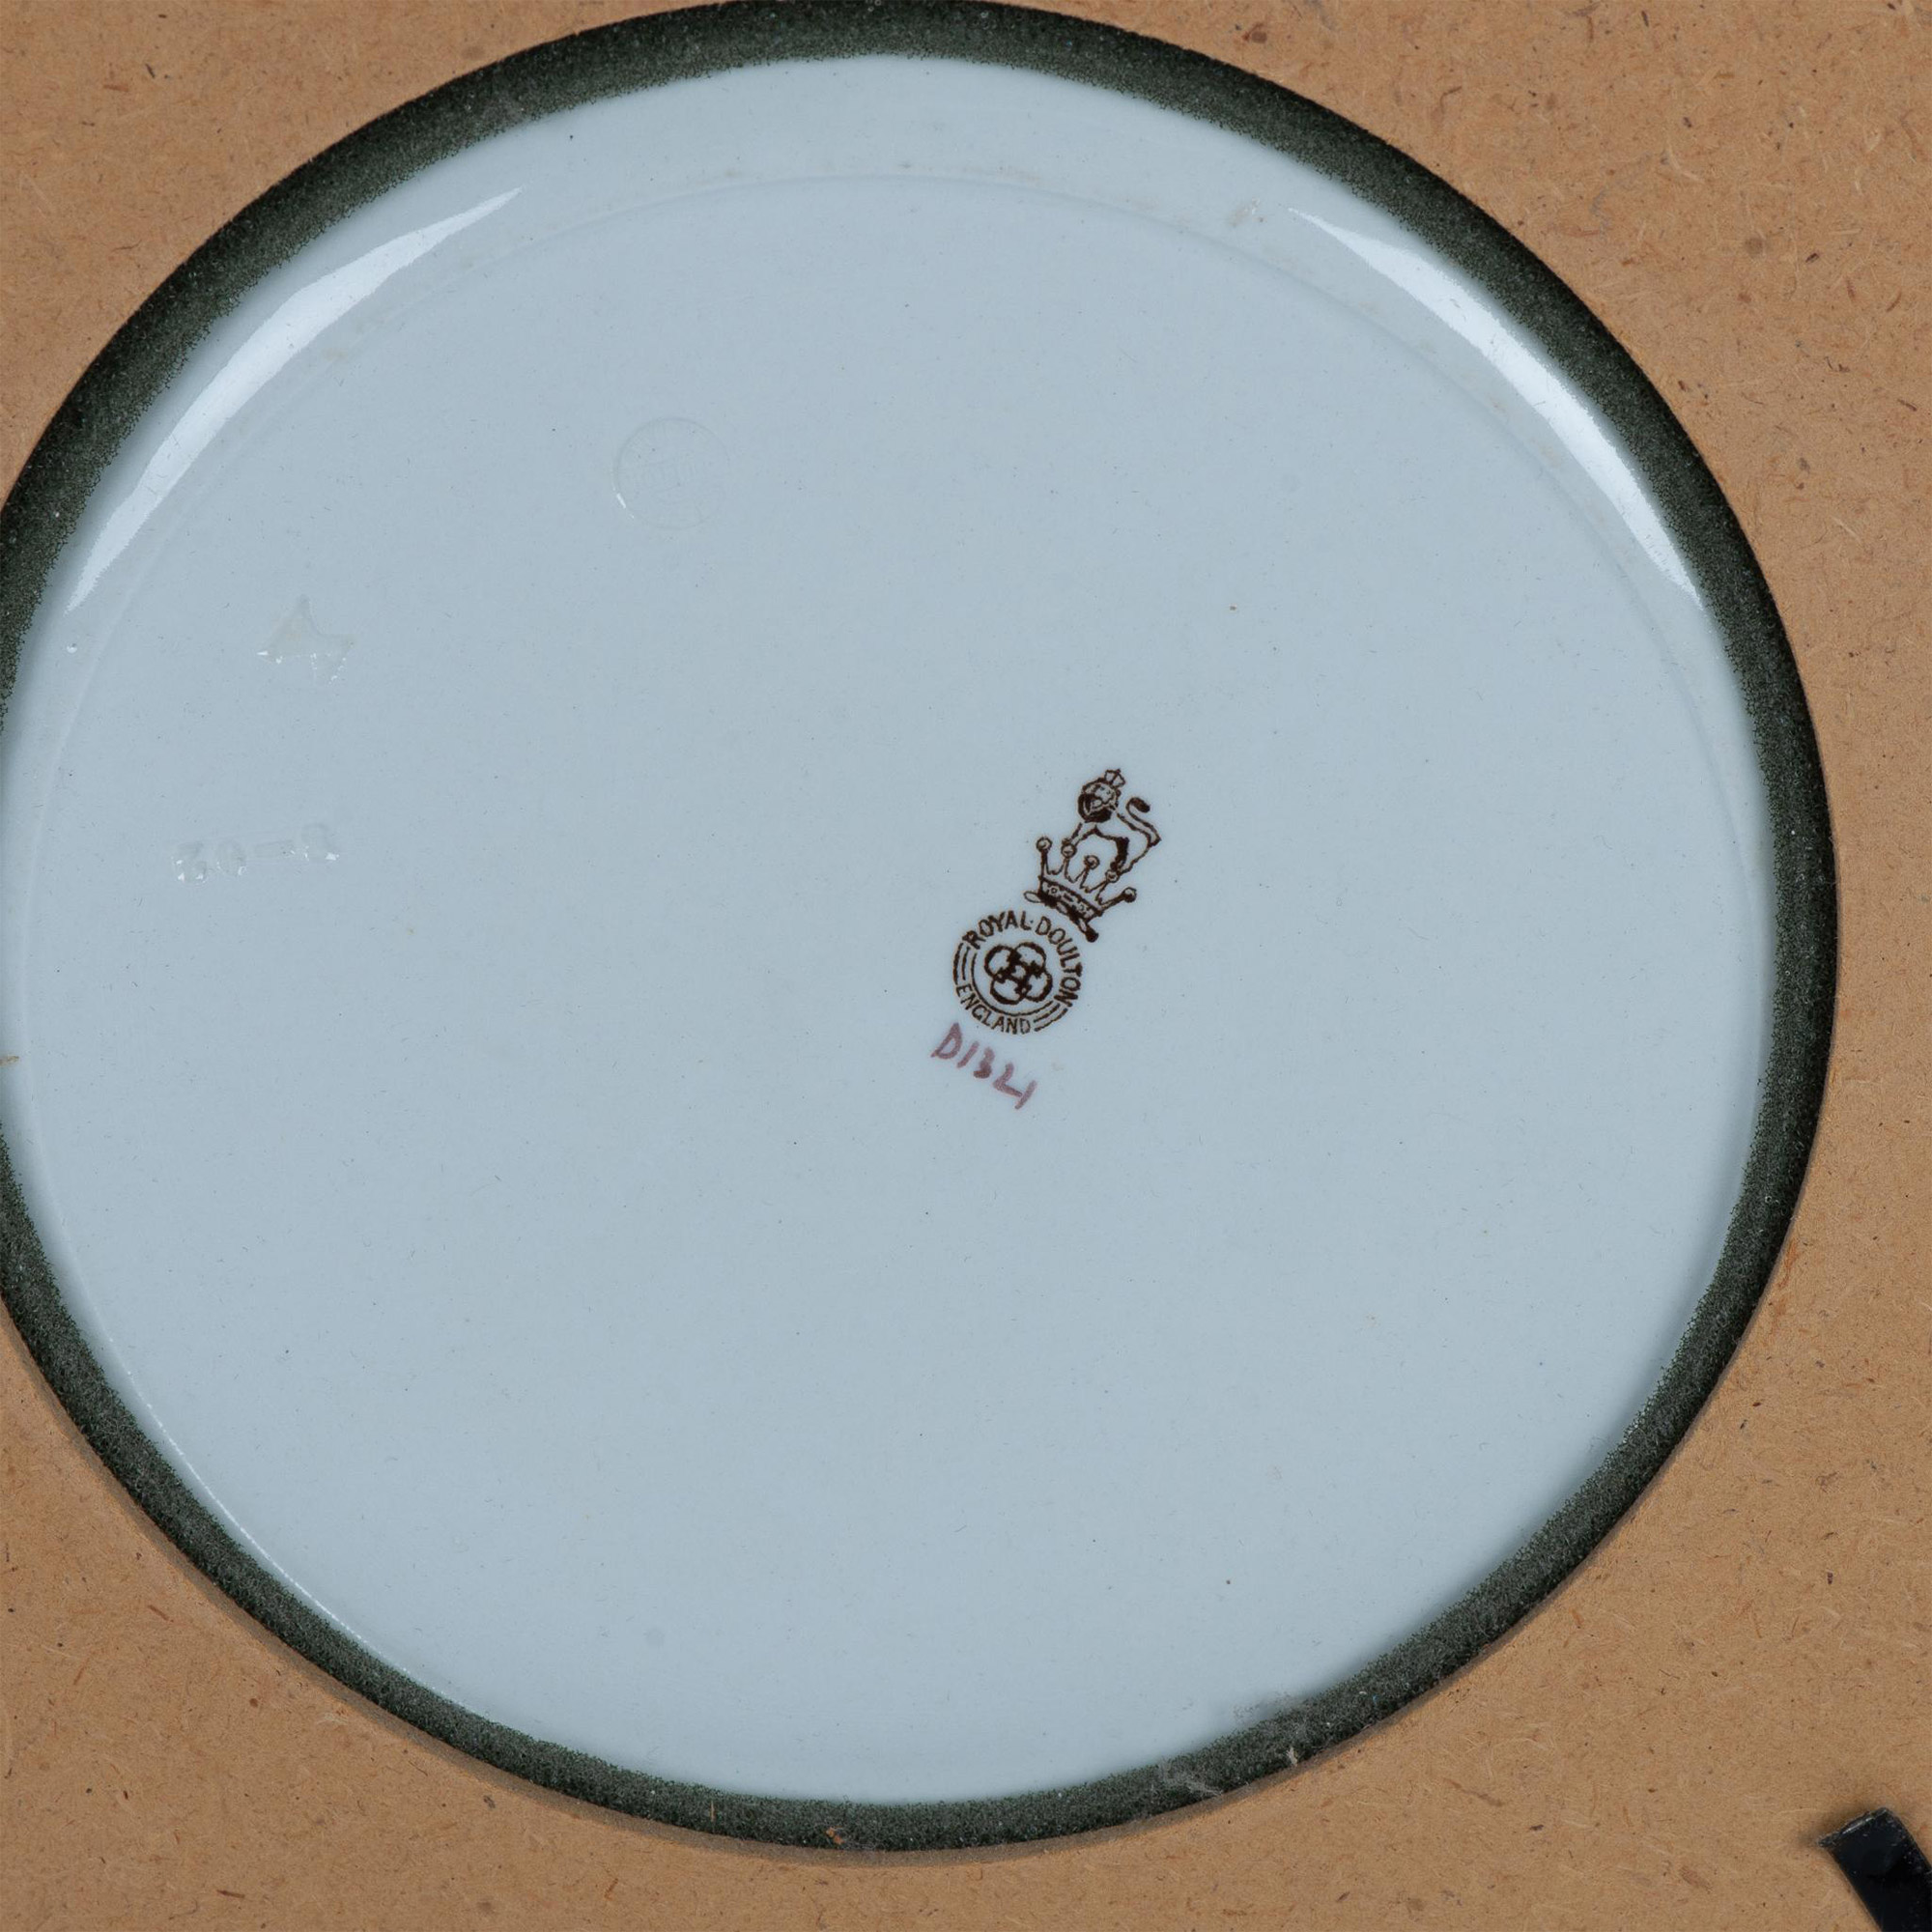 Pair of Royal Doulton Hunting Morland Seriesware Plates - Image 5 of 9